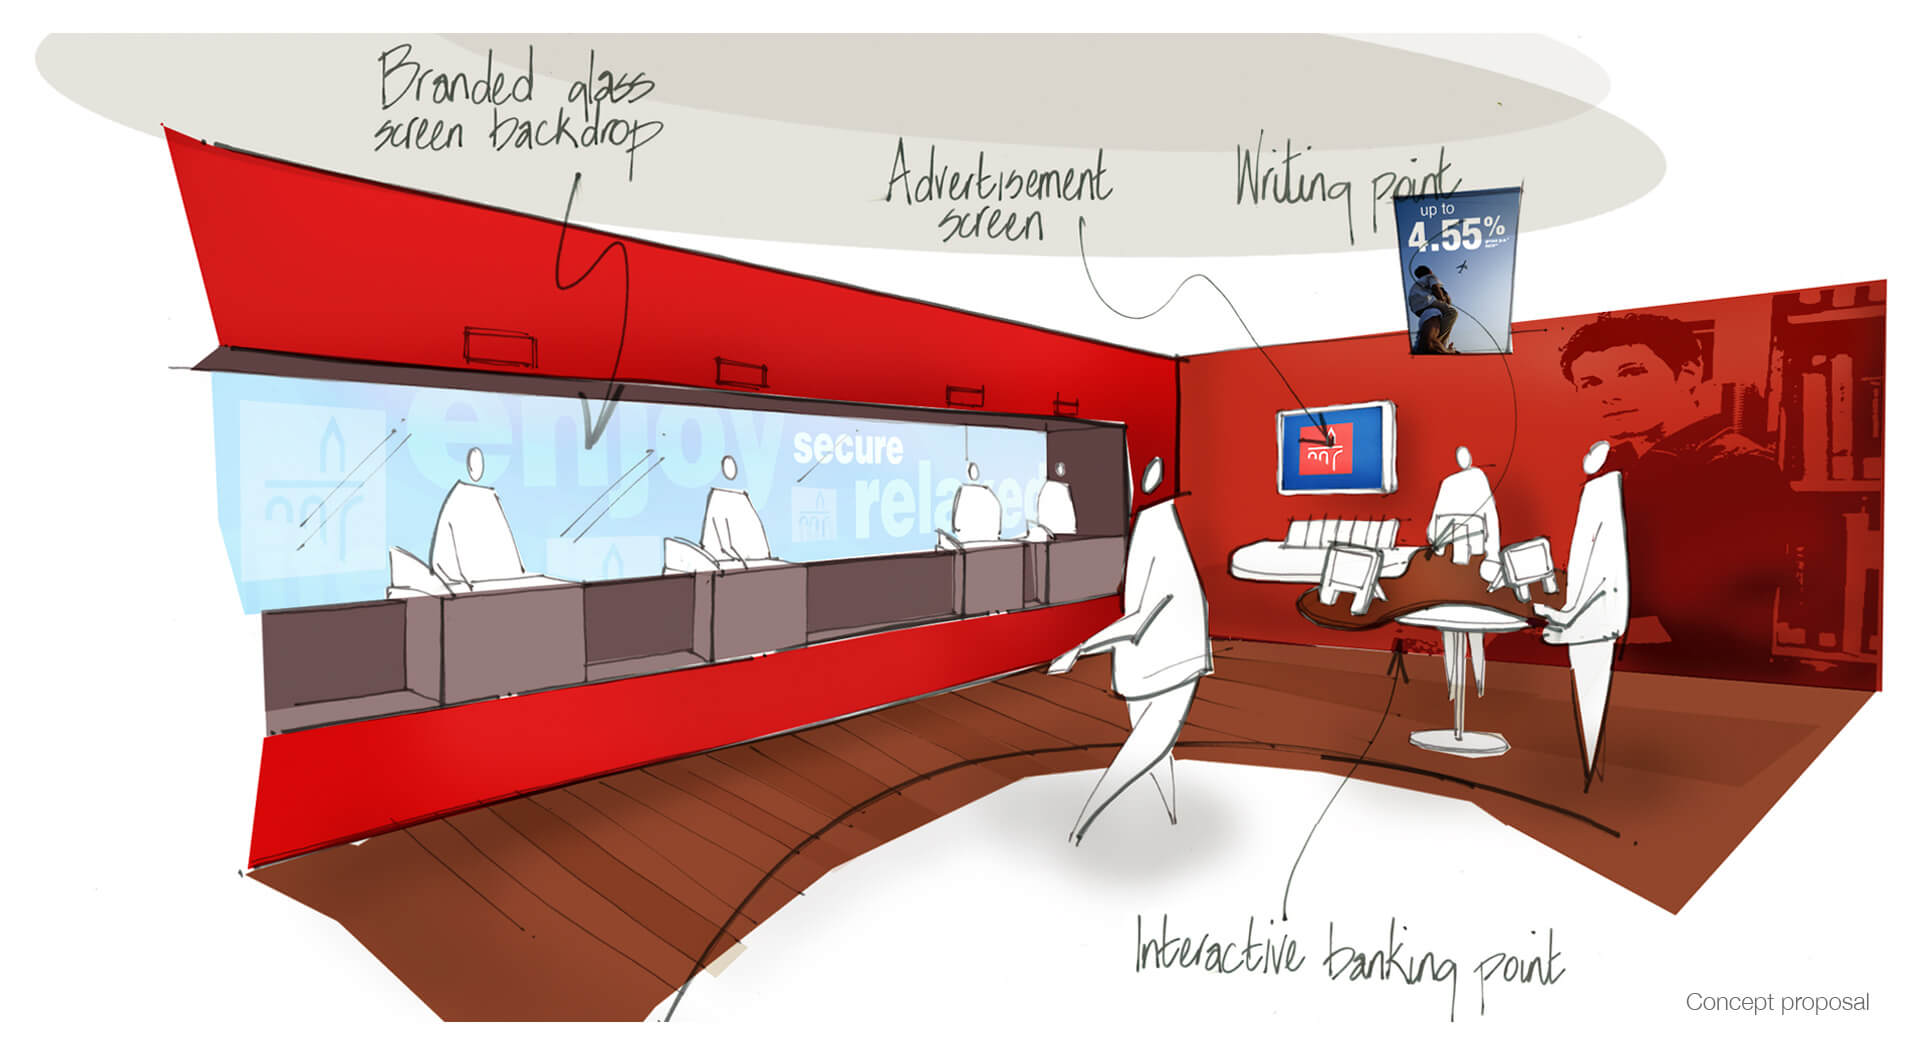  HSBC future rebrand concepts, inspiring sketch ideas for interior design